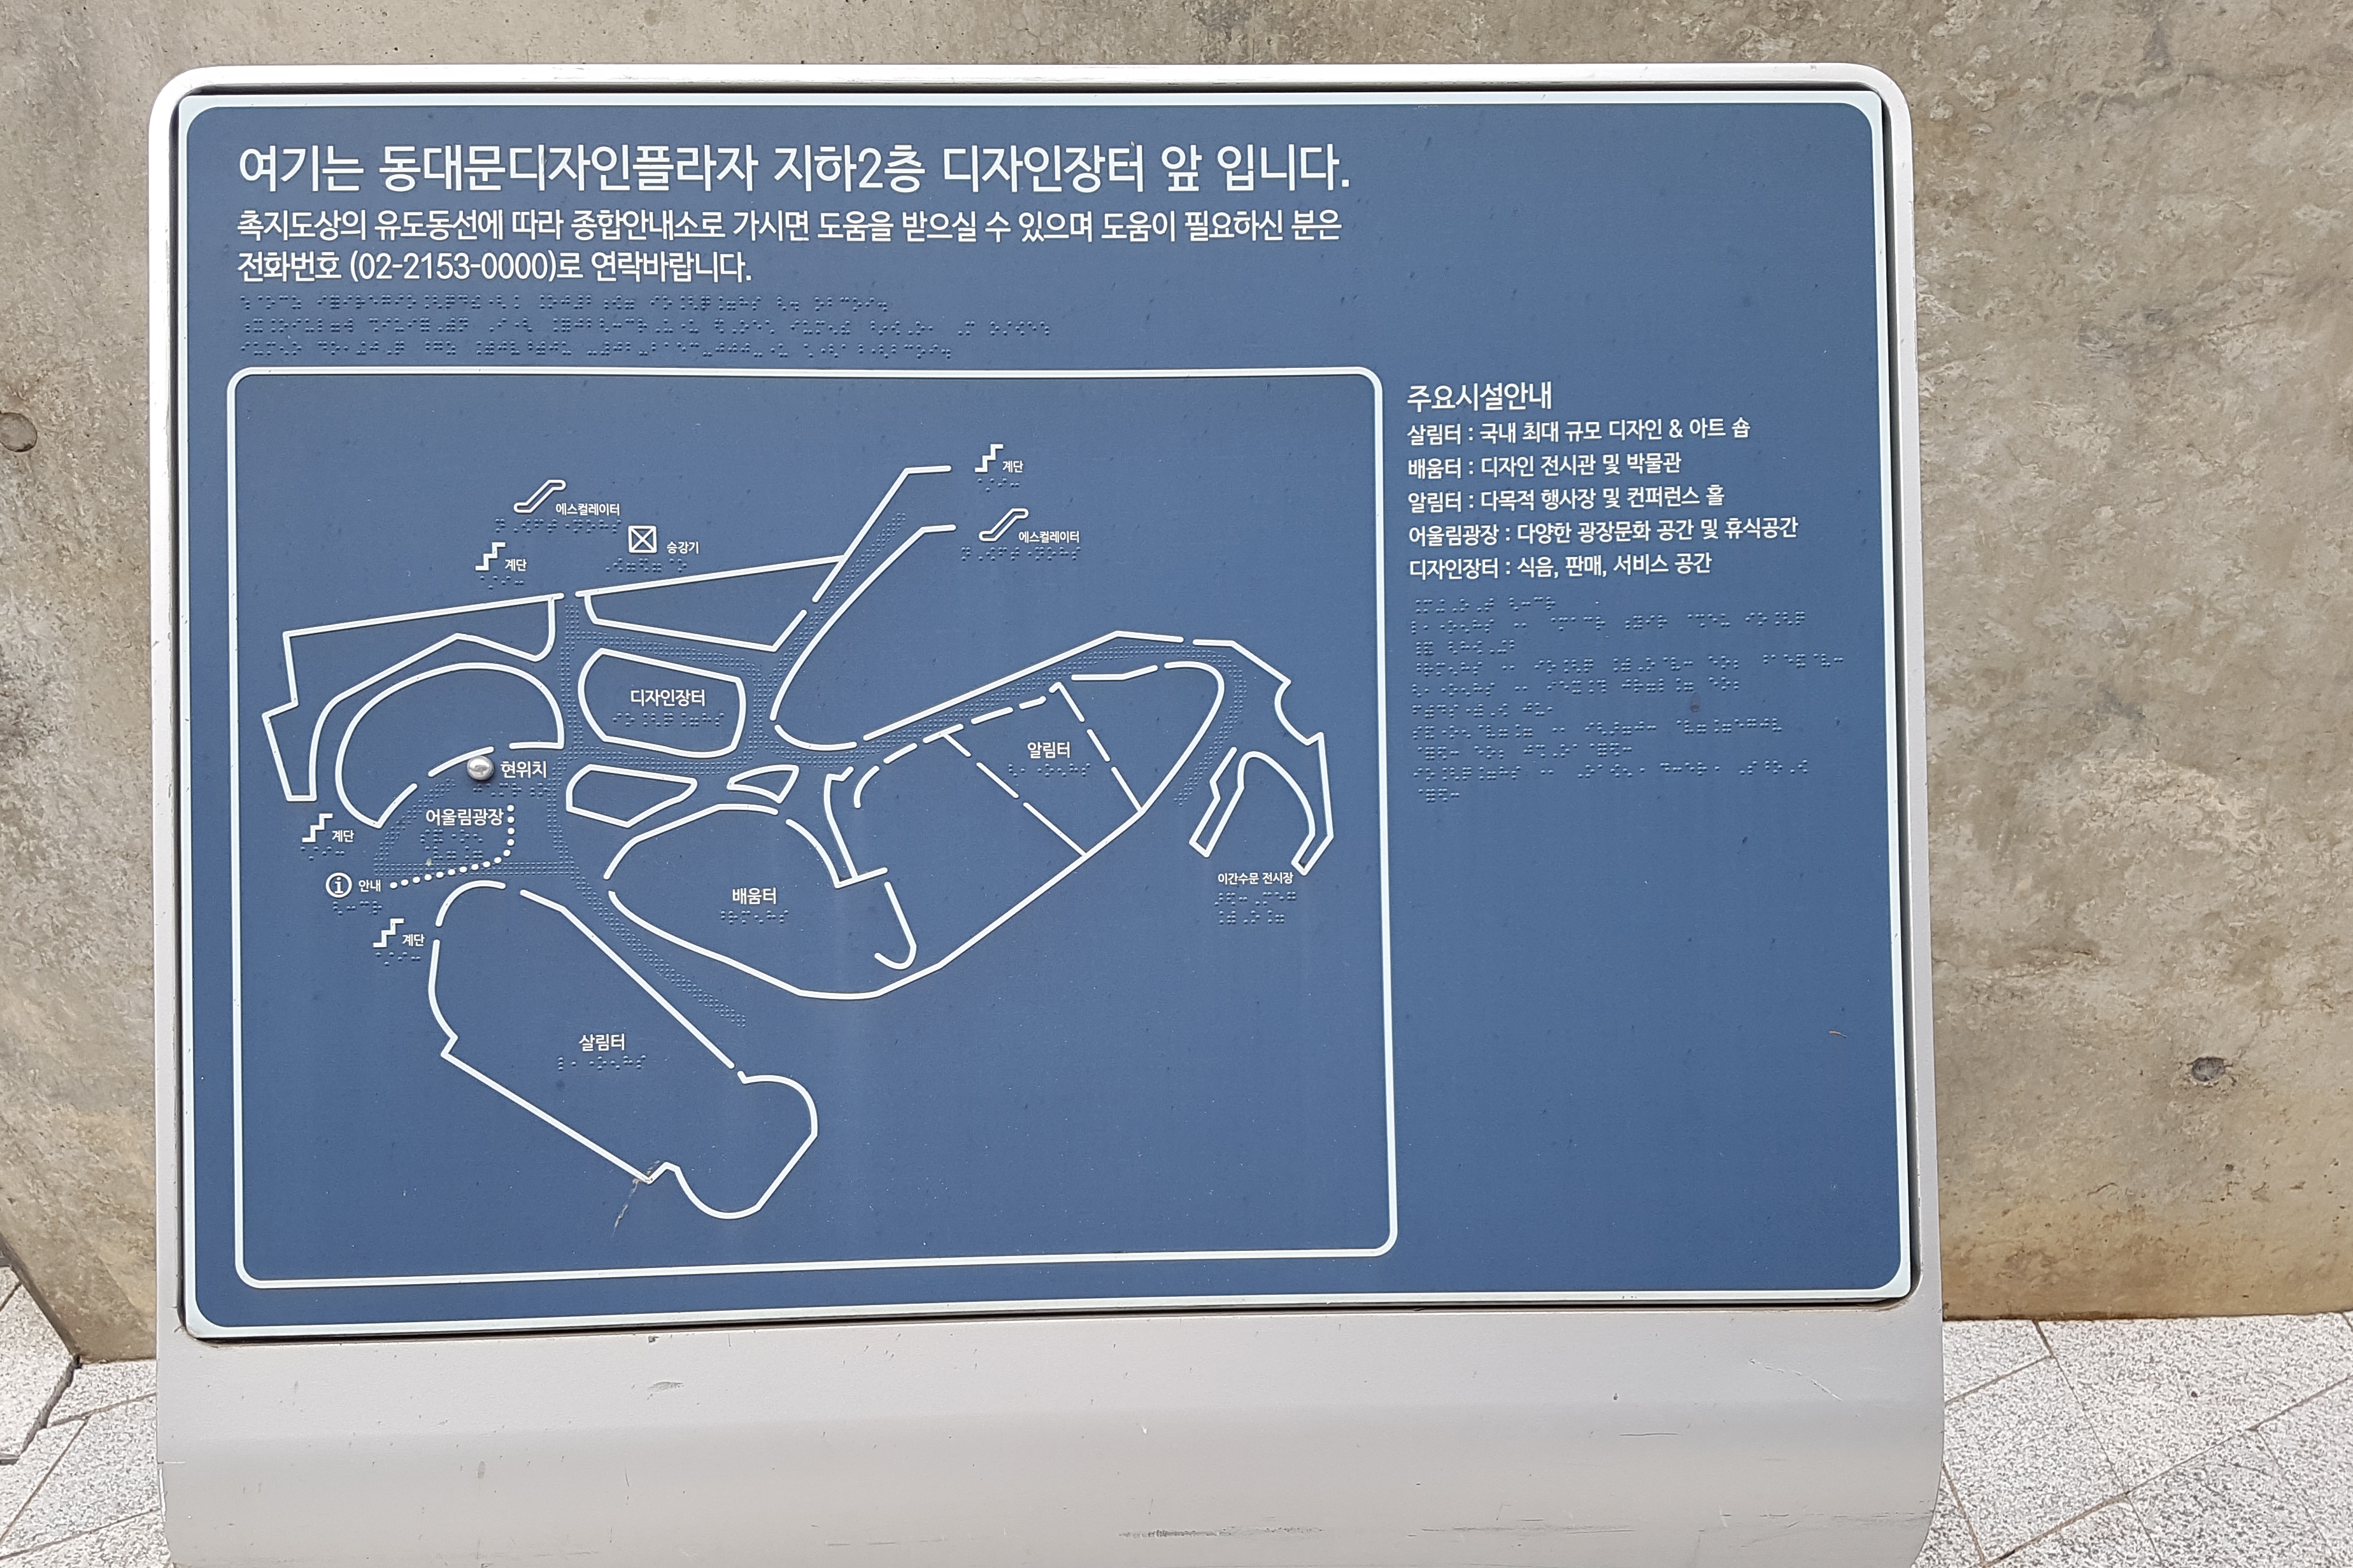 Information board/ Information desk0 : Korean braille maps with call nuber of information center